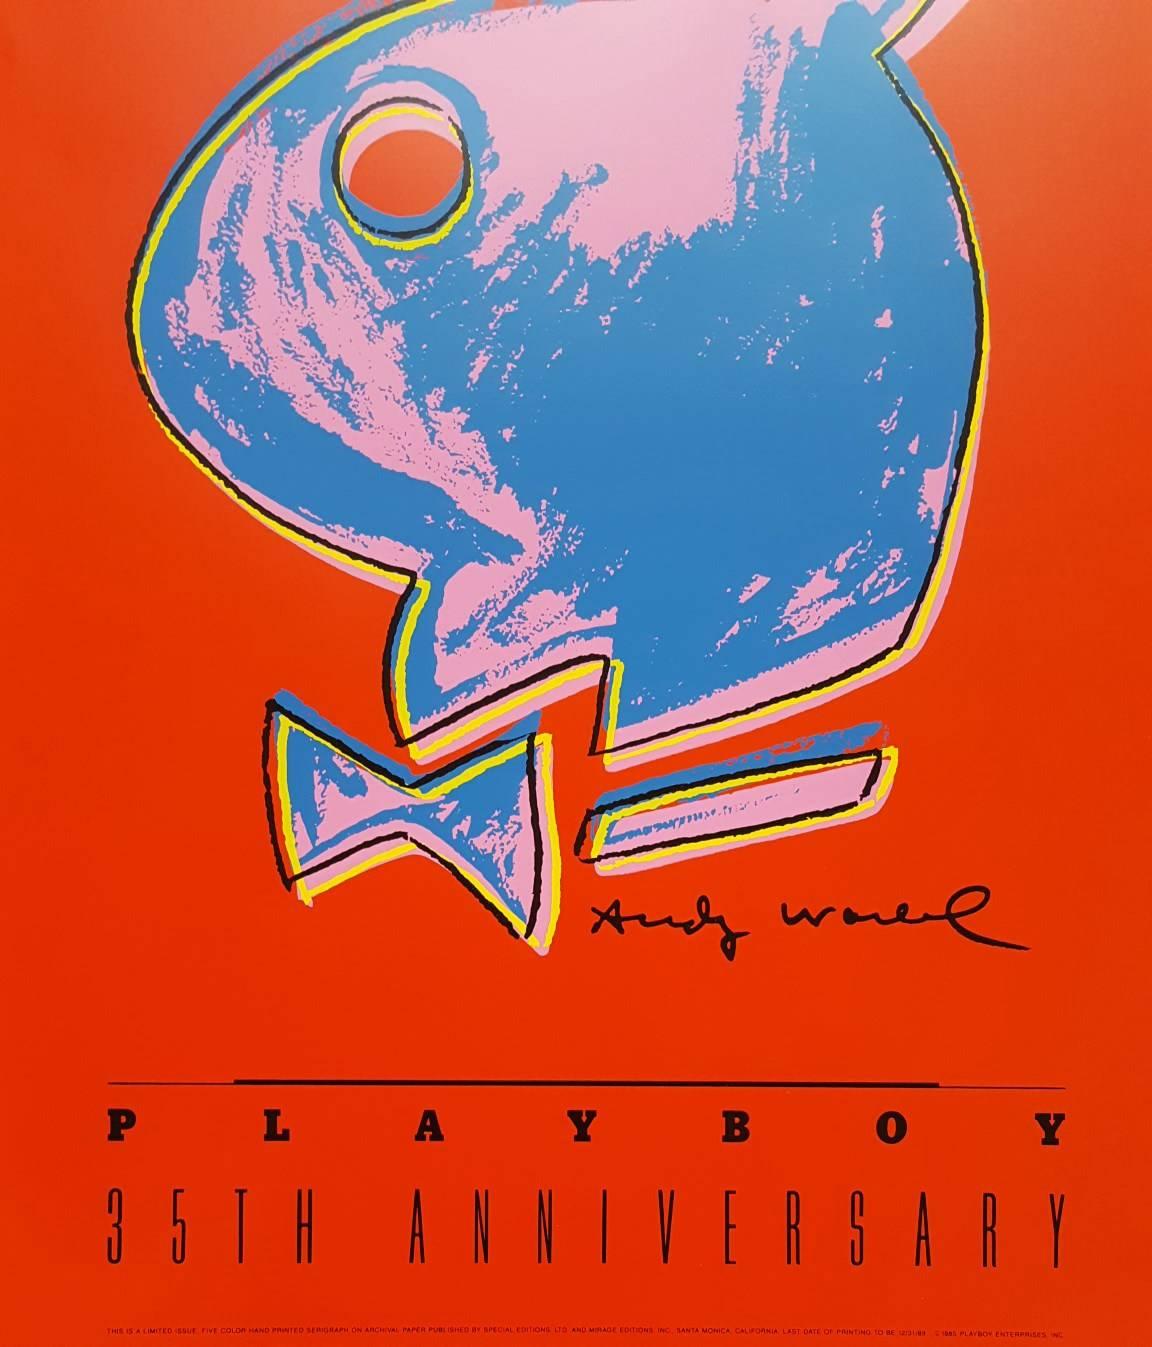 Playboy 35th Anniversary - Pop Art Print by Andy Warhol